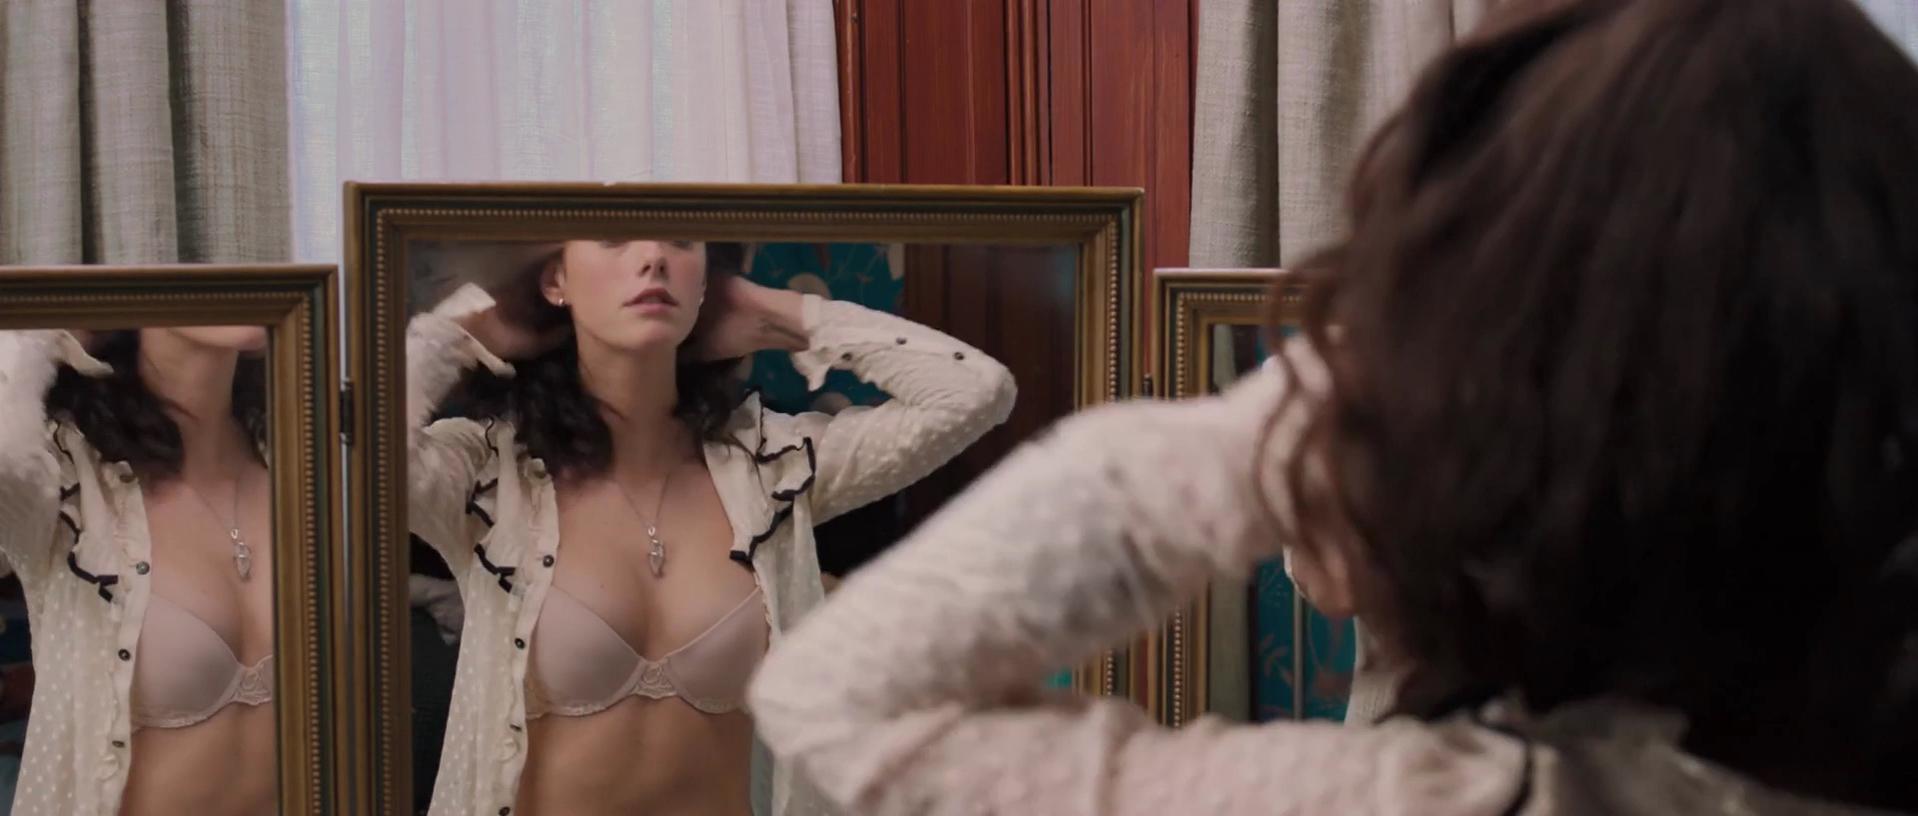 Nude Video Celebs Actress Kaya Scodelario